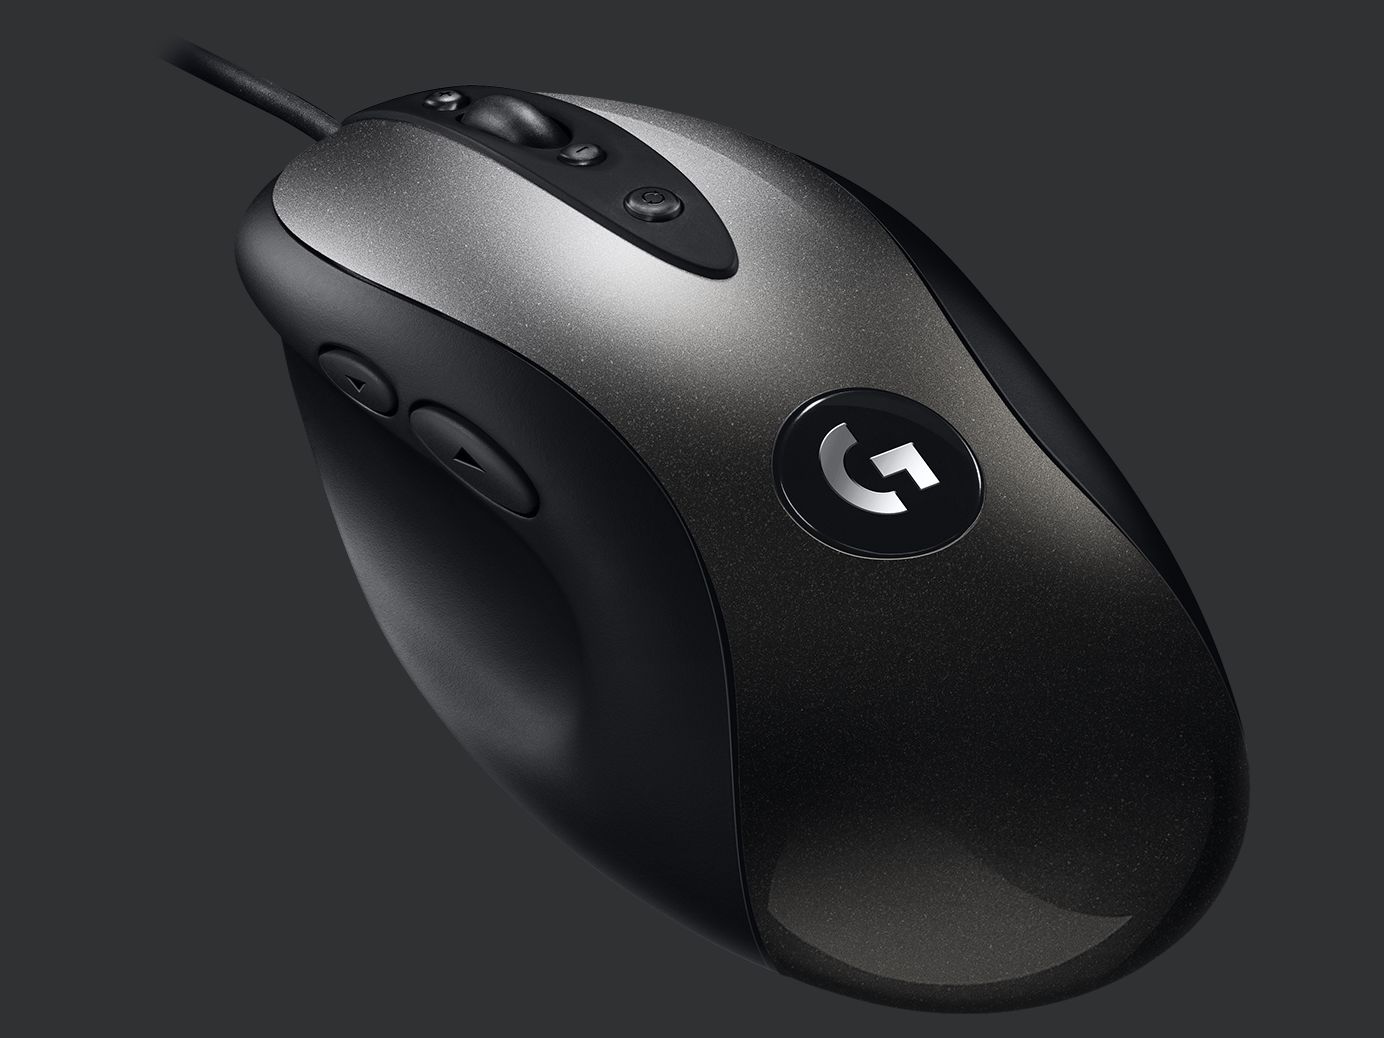 Logitech Re-Launches 'Legendary' Mouse with 16,000 DPI Sensor